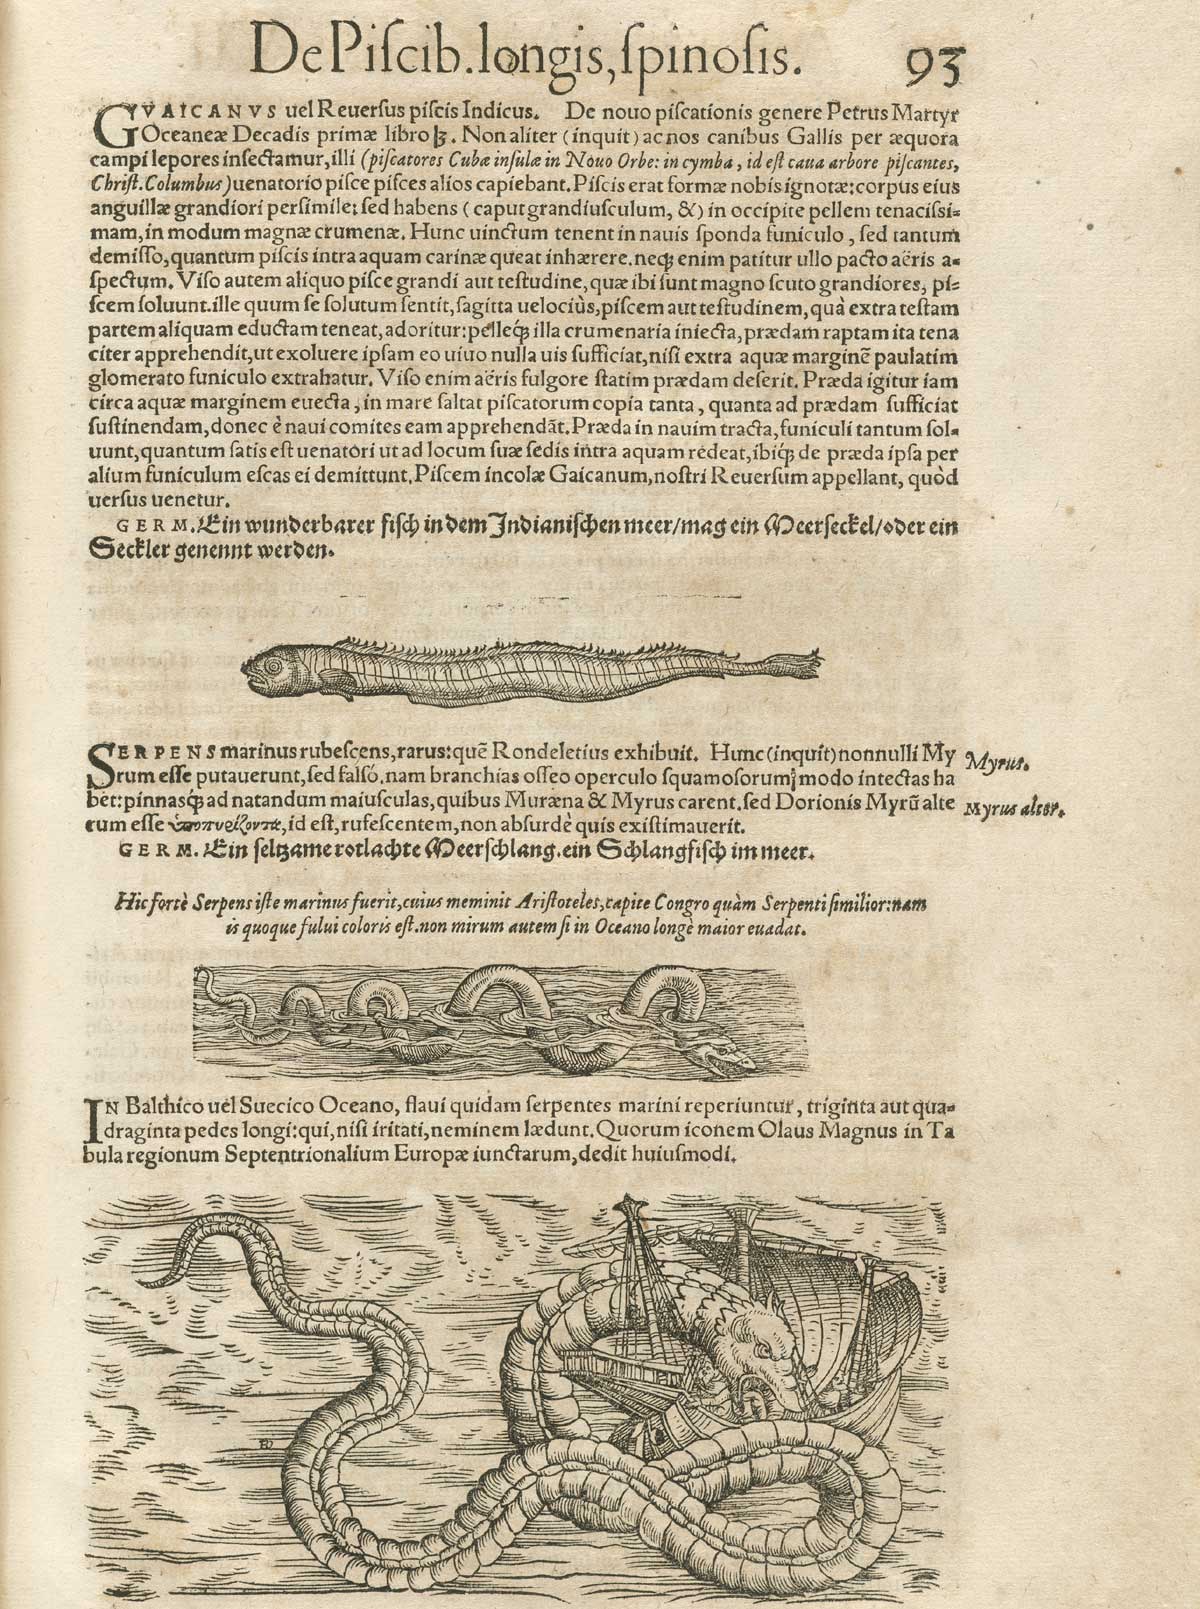 Page 93 from volume 4 of Conrad Gessner's Conradi Gesneri medici Tigurini Historiae animalium, featuring a sea serpent.